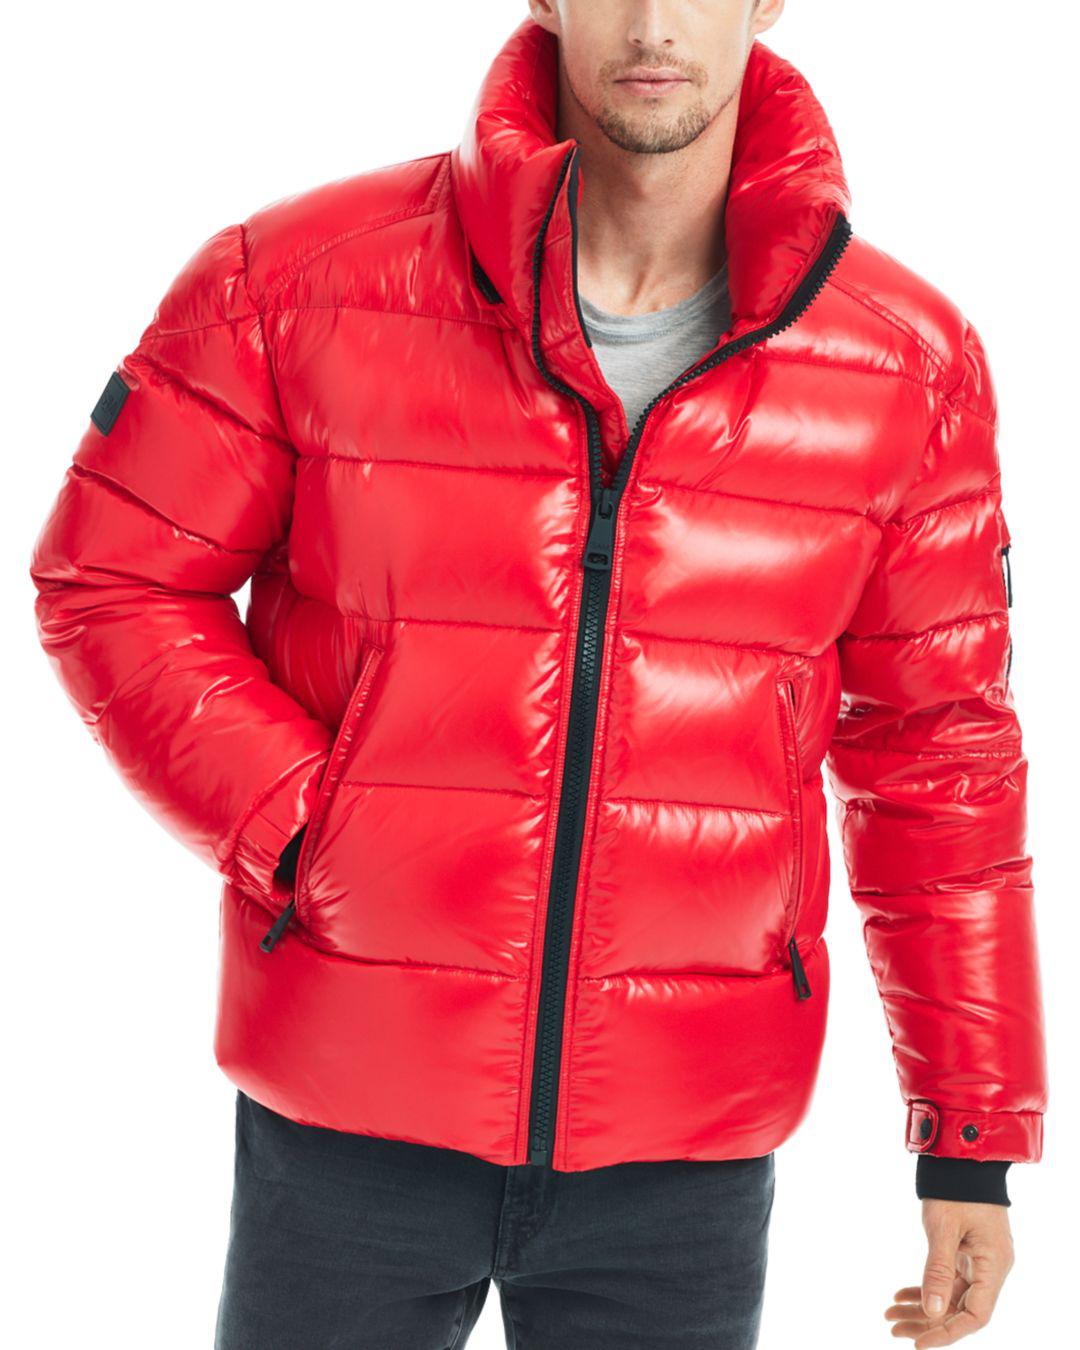 Мужские куртки red. Puffer Jacket мужская. Куртка зимняя мужская down Jacket. Красный пуховик мужской. Красная зимняя куртка мужская.